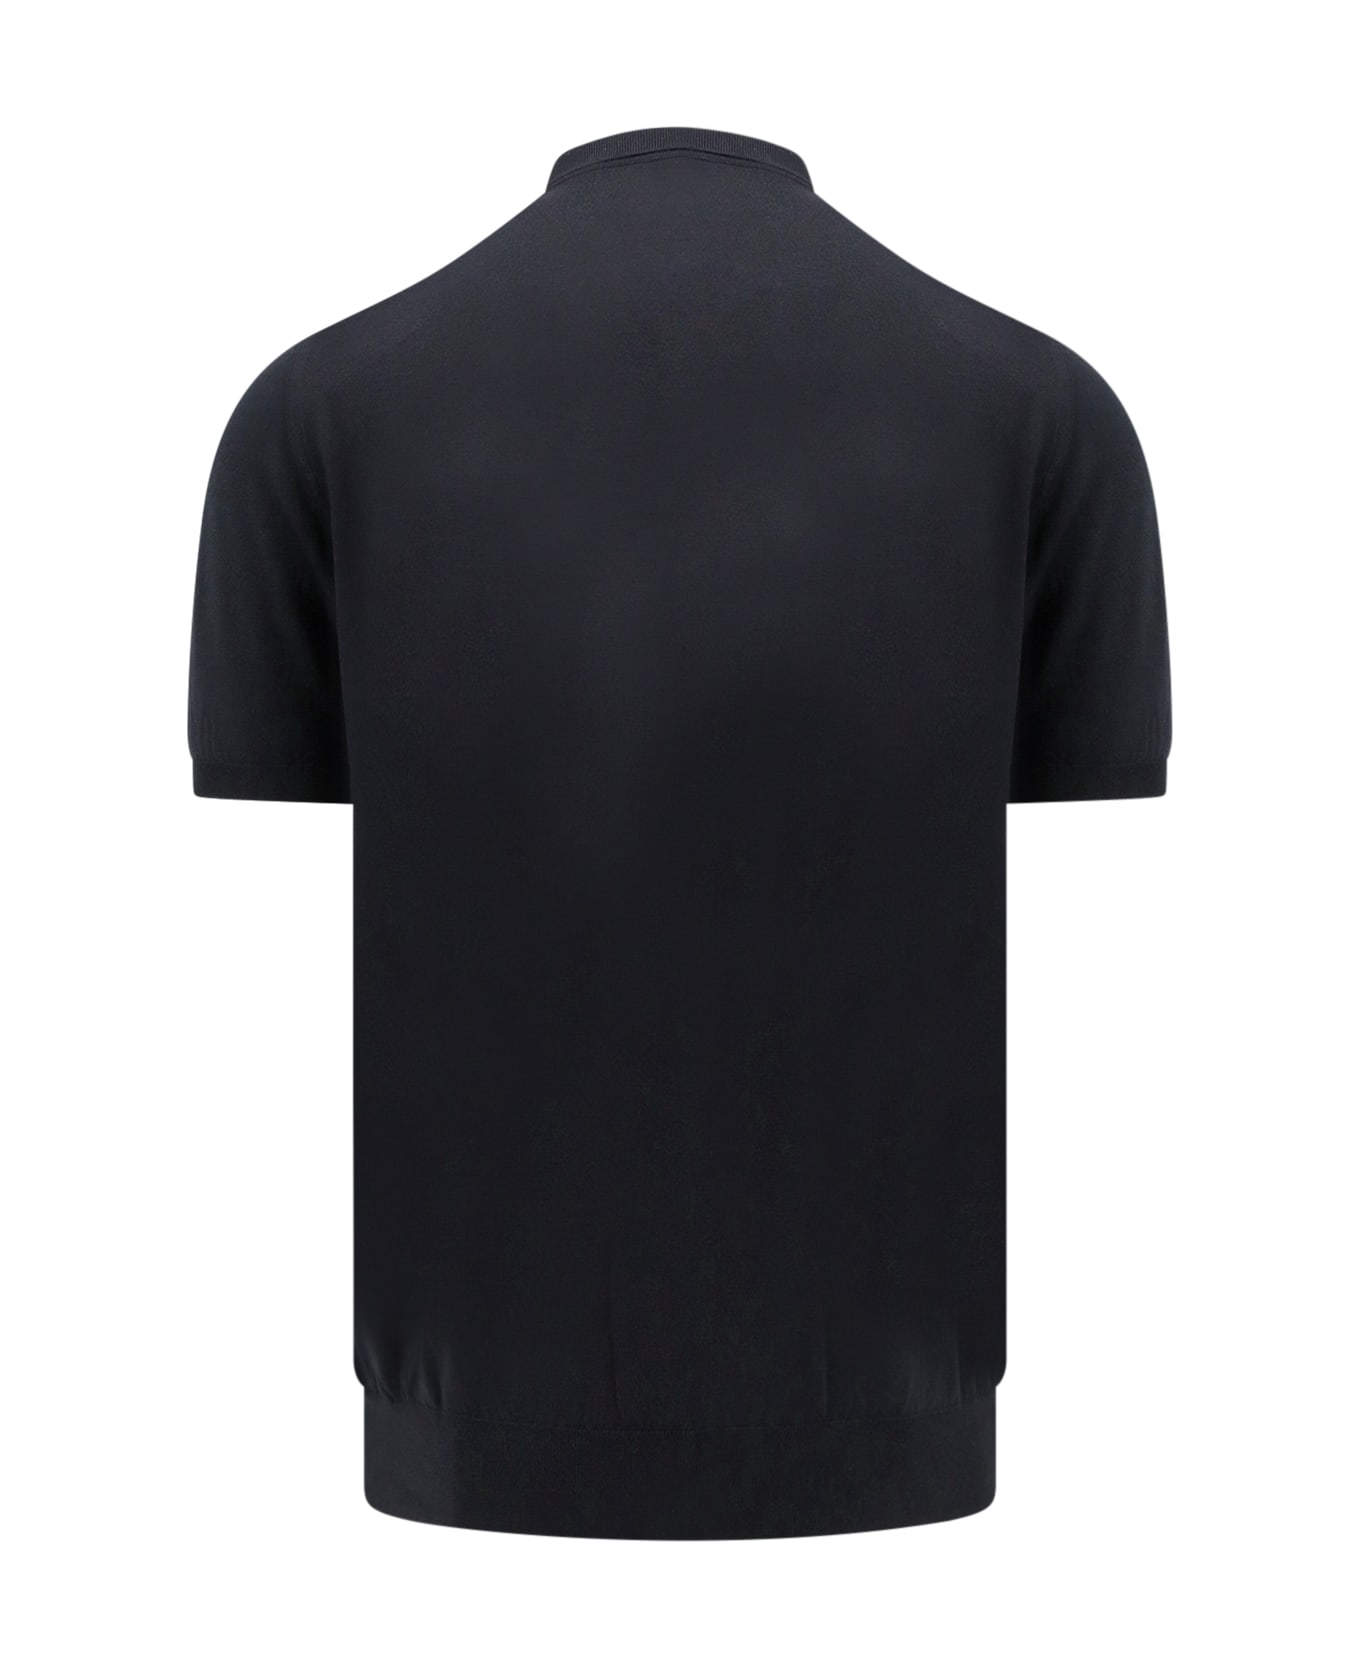 Kiton Polo Shirt - Black ポロシャツ